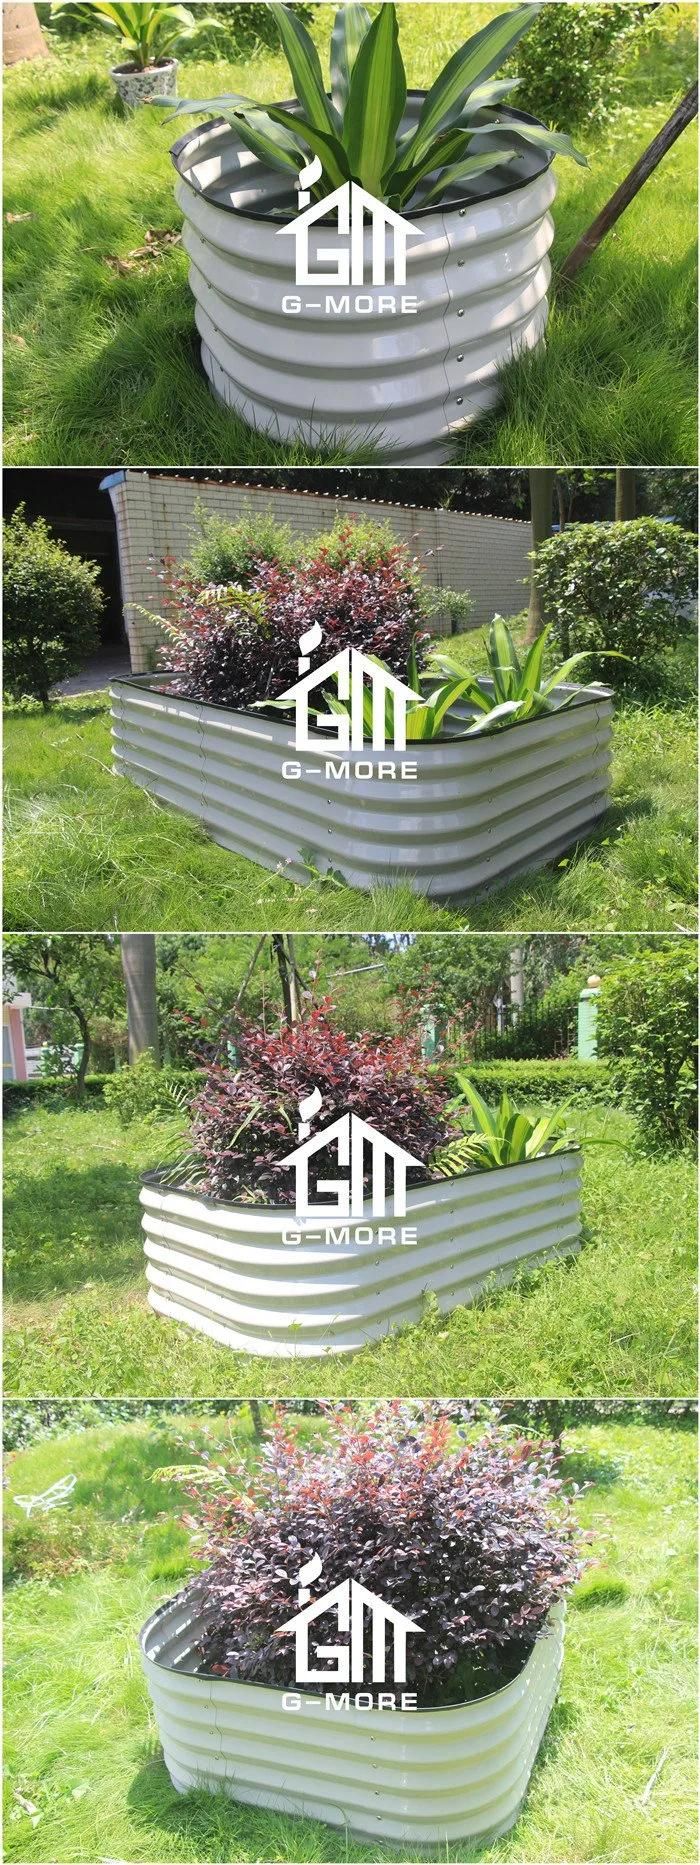 Garden Beds Raised Metal Garden Bed Galvanized Steel Oval Raised Garden Planters